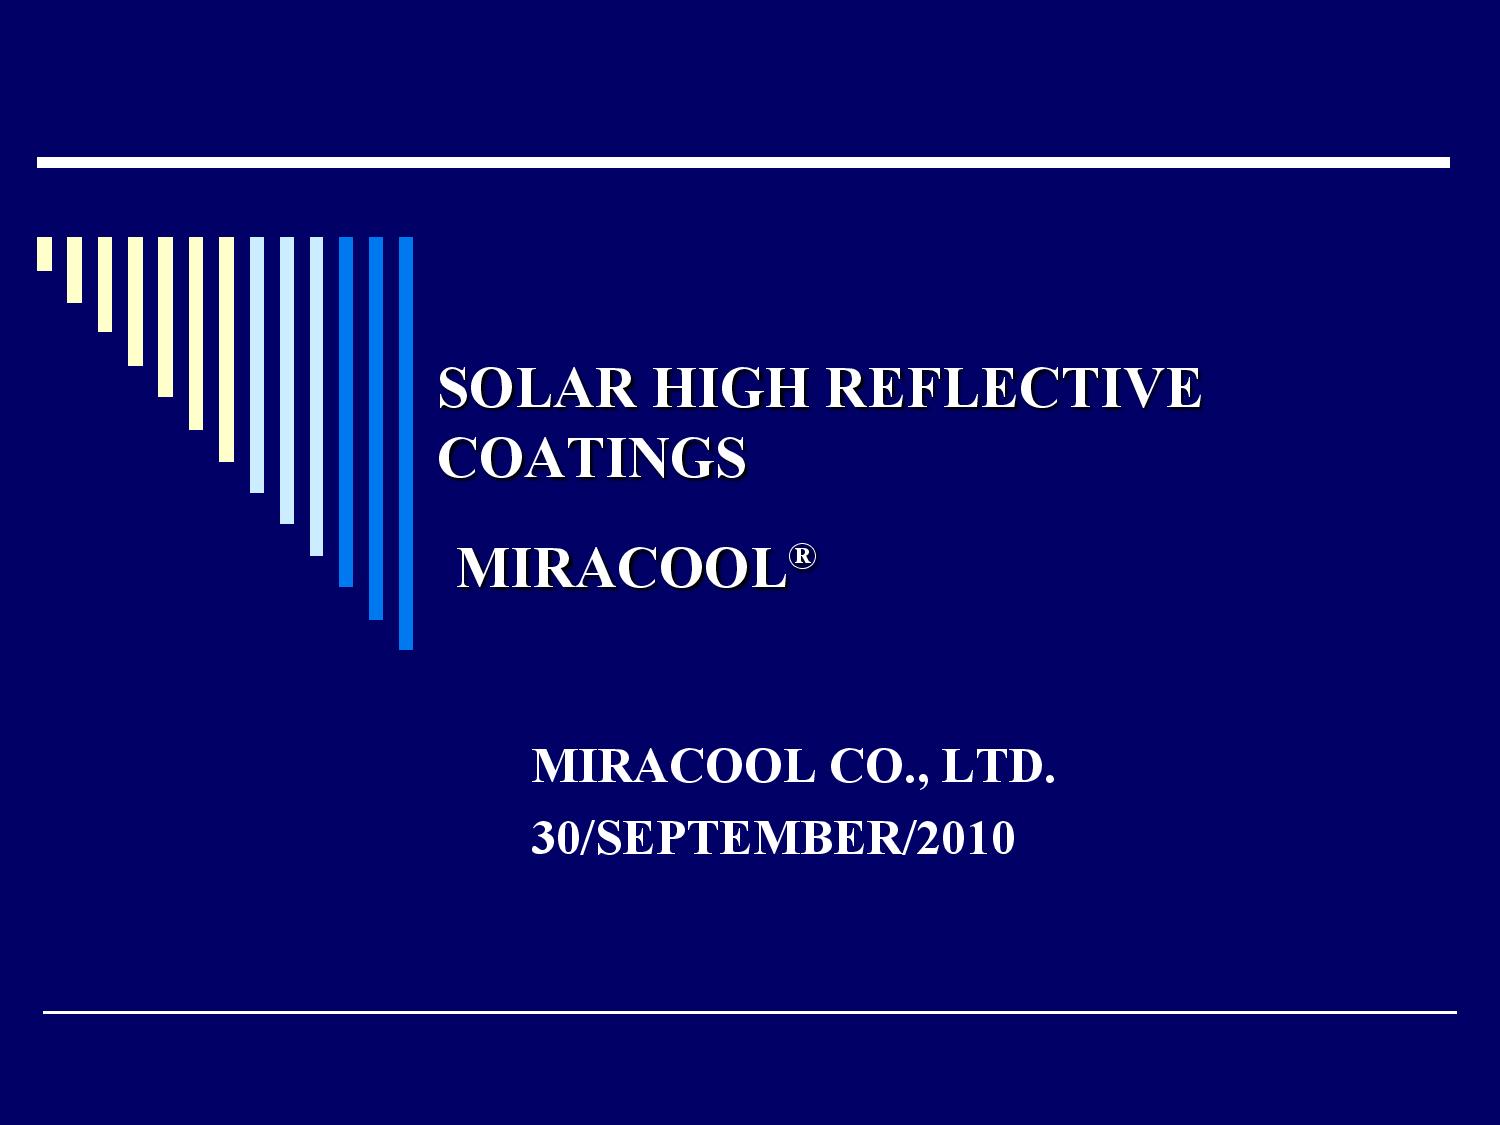 Solar High Reflective Coatings: Miracool Co., Ltd.